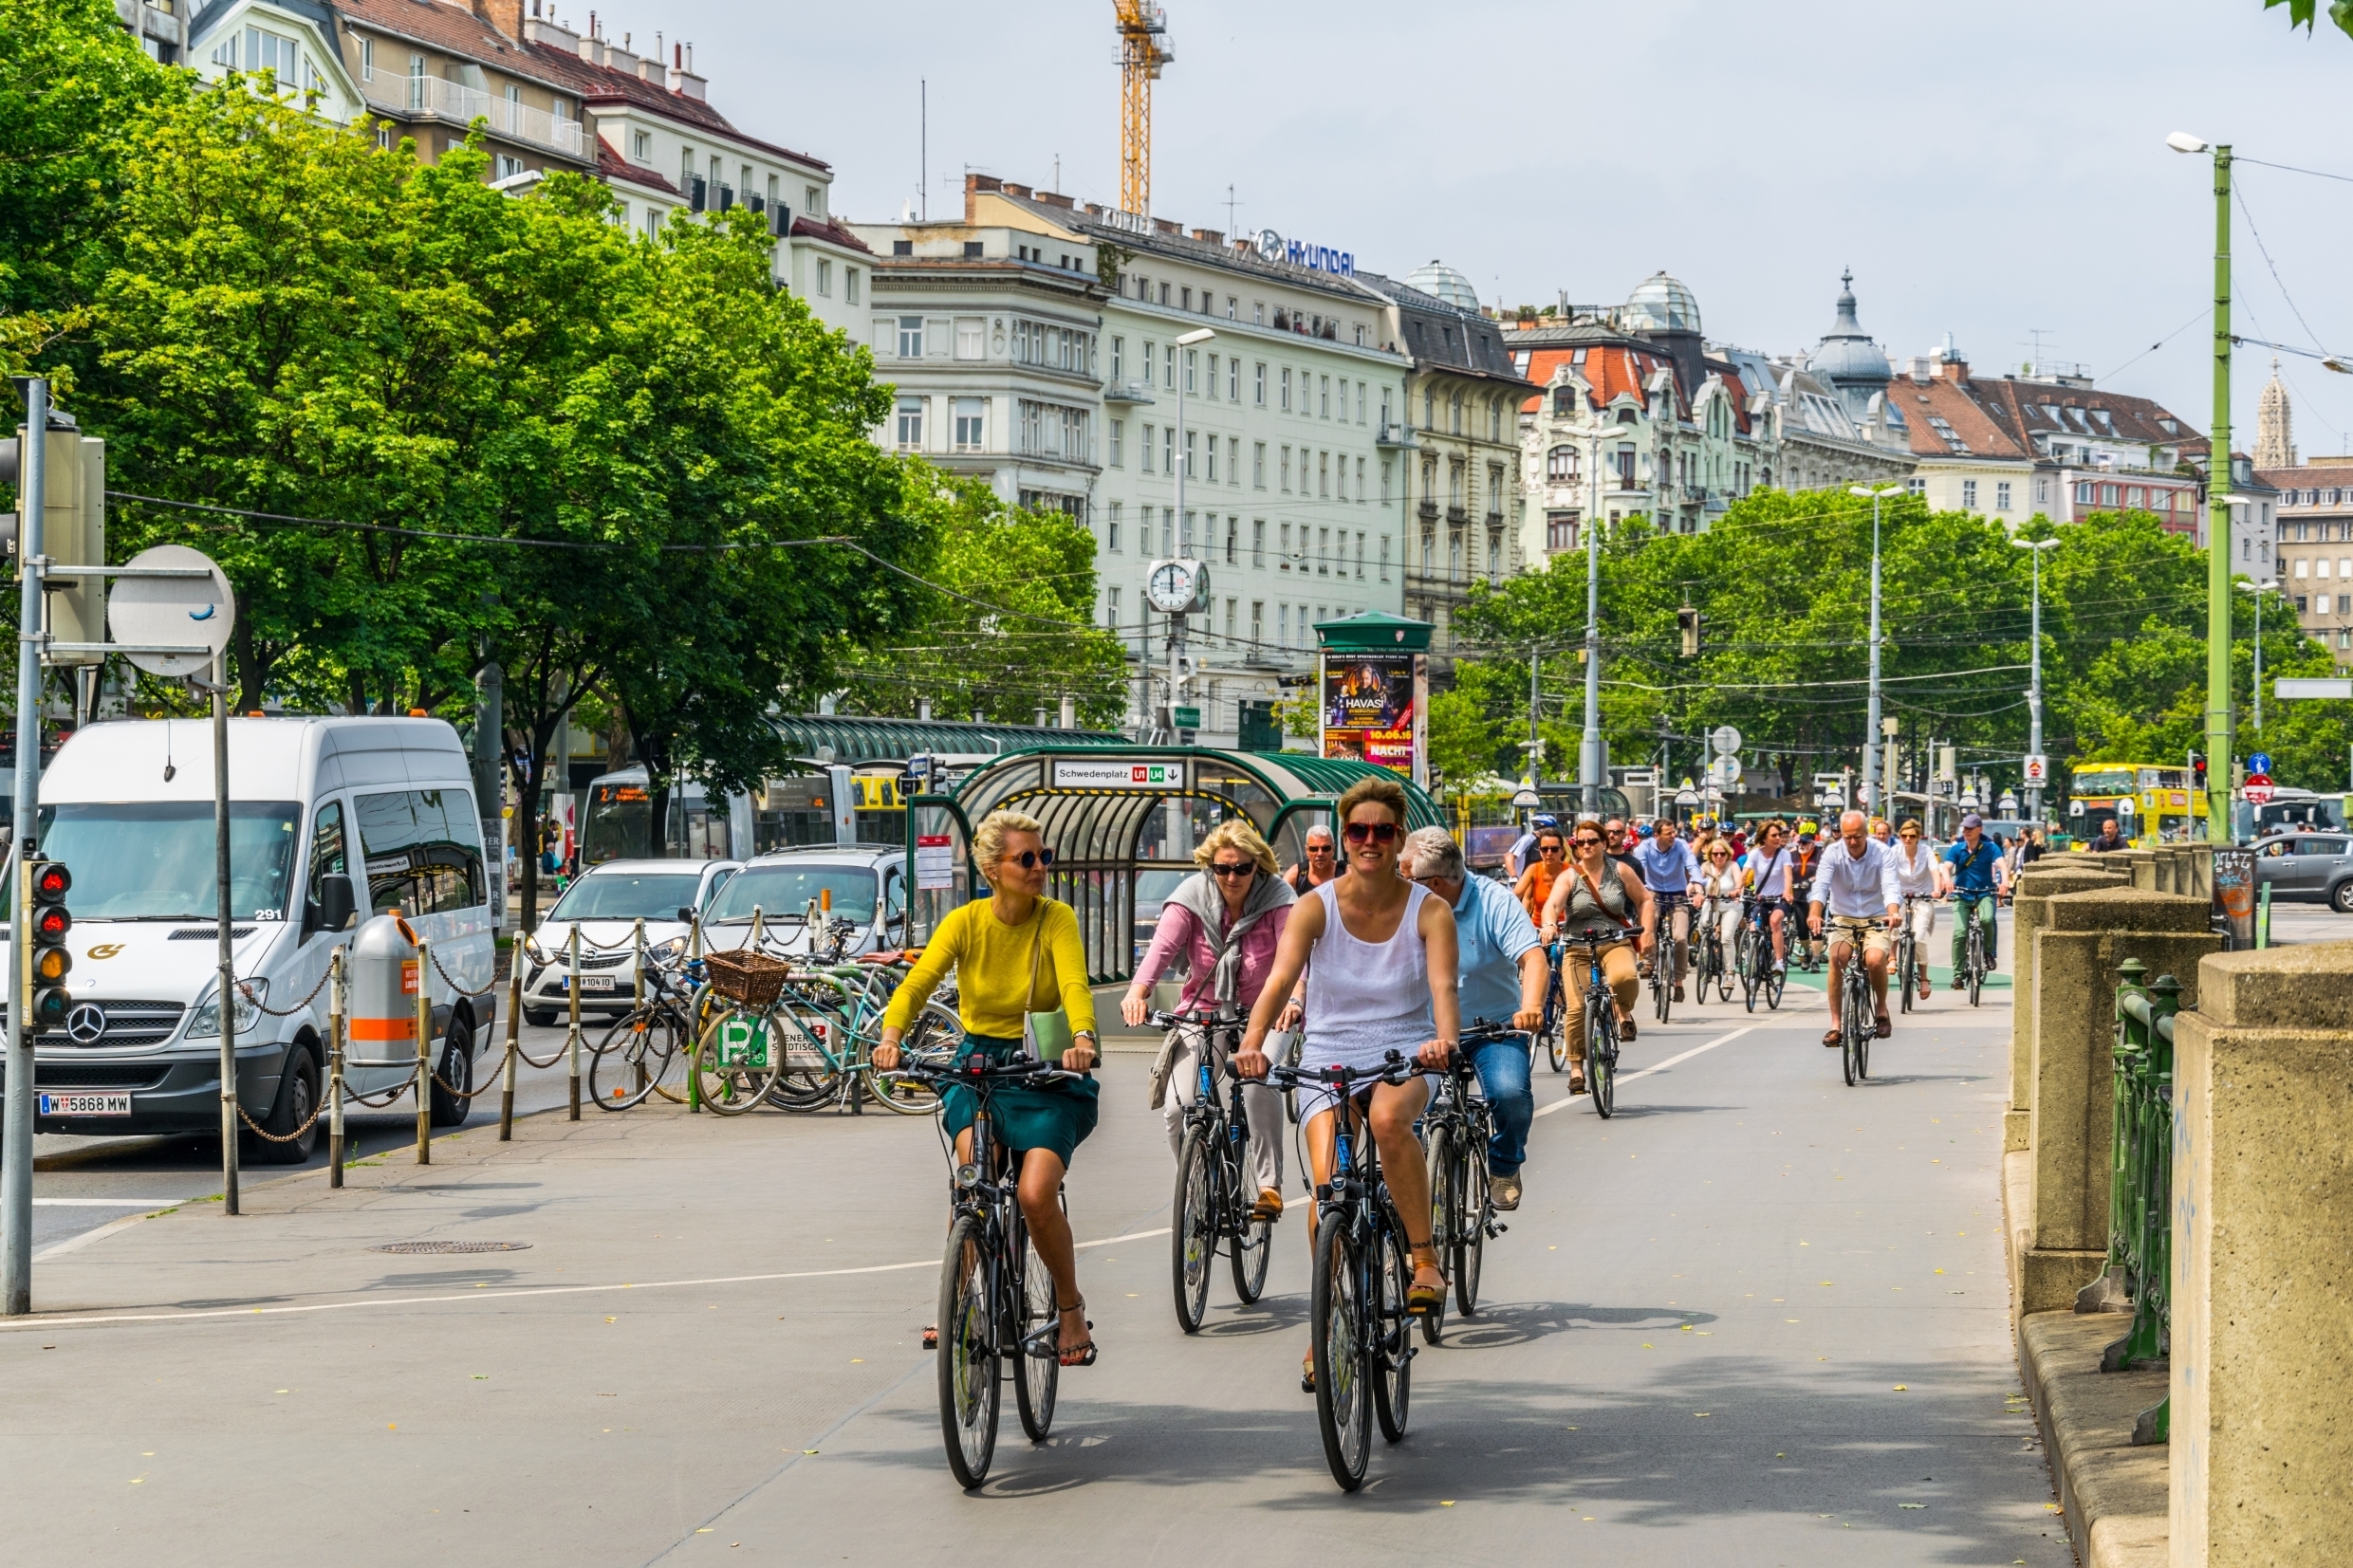 People are biking on a lane alongisde the donau channel in Vienna, Austria.